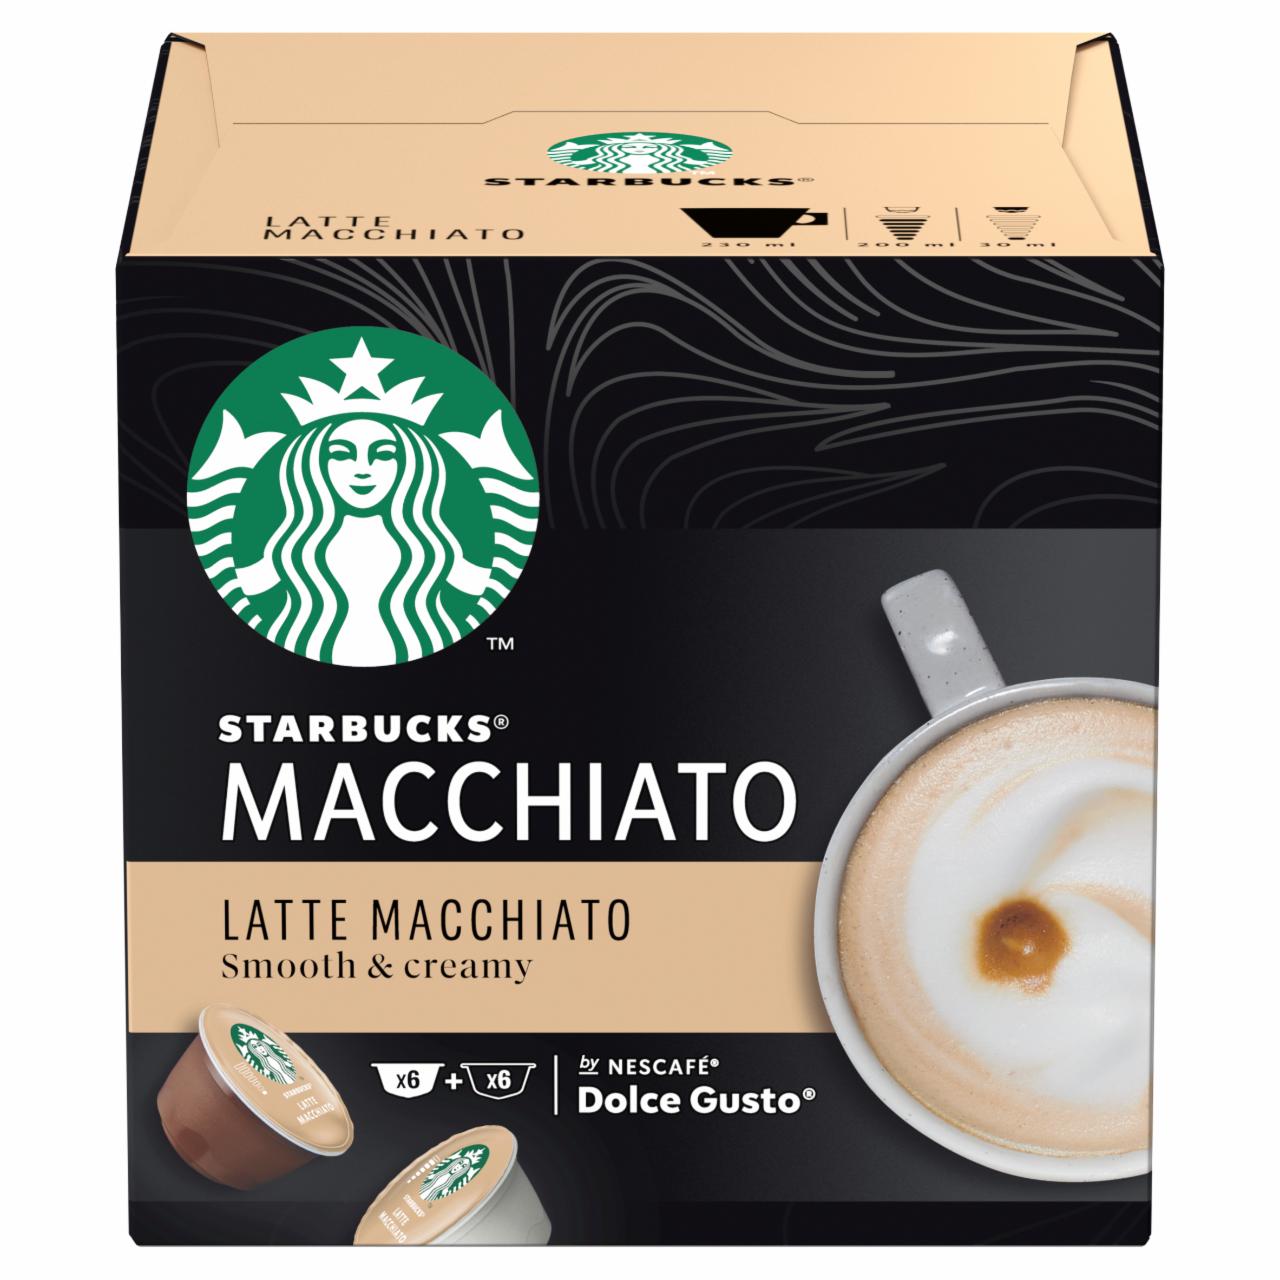 Zdjęcia - Nescafé Dolce Gusto Starbucks Latte Macchiato Kawa w kapsułkach 129 g (6 x 16 g 6 x 5,5 g)